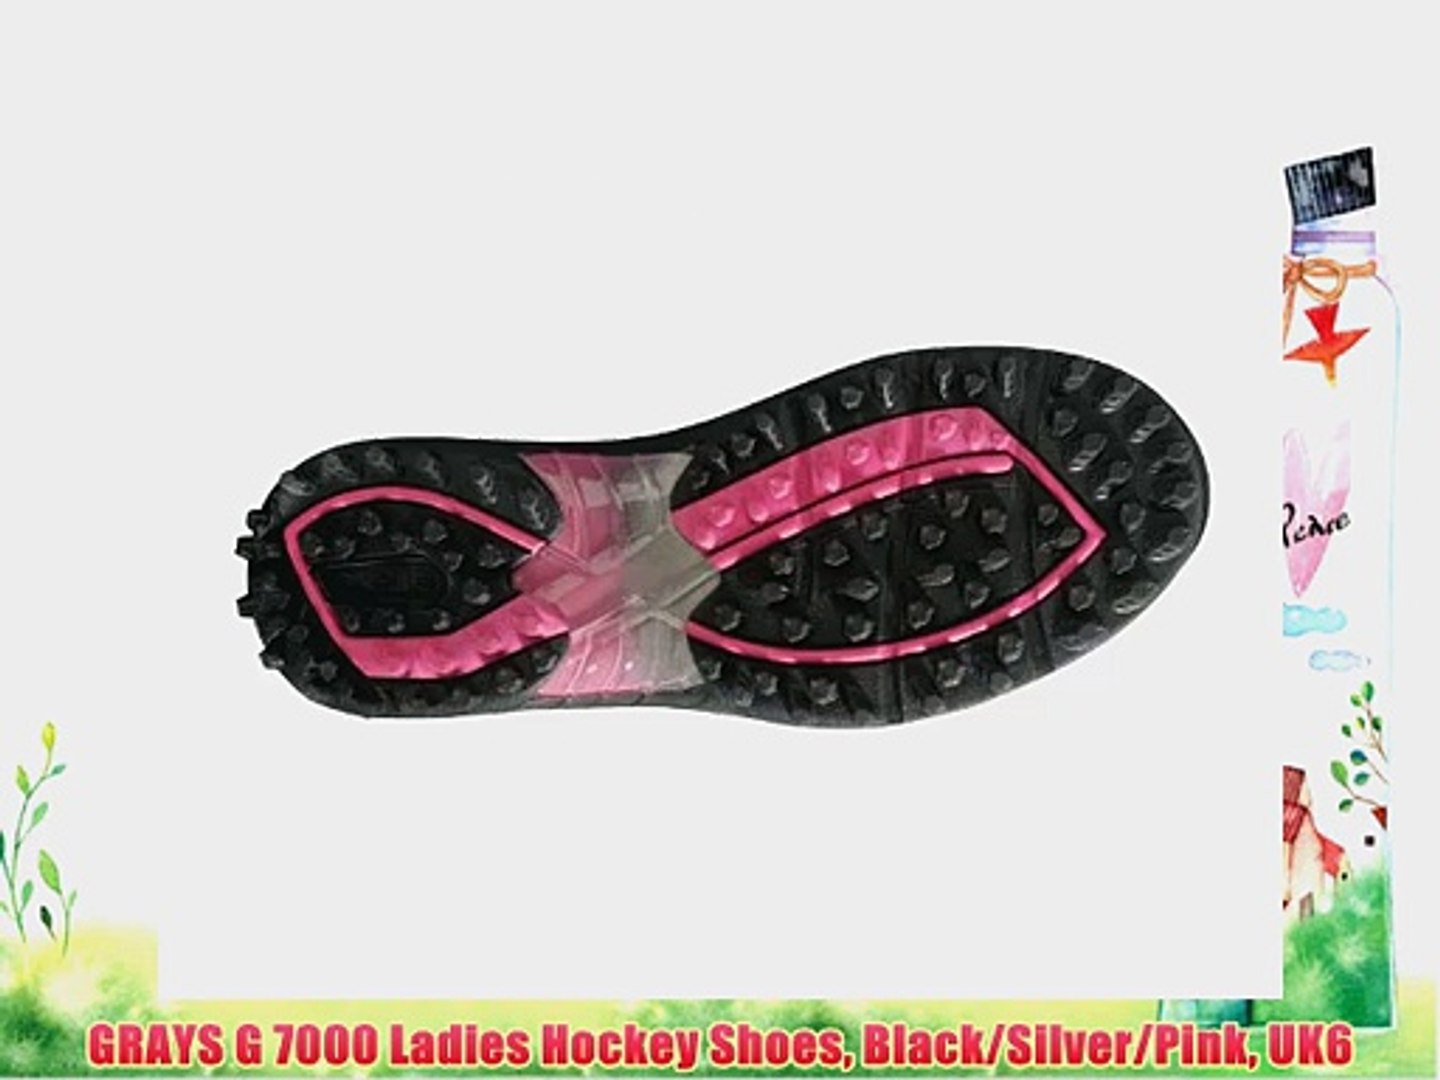 ⁣GRAYS G 7000 Ladies Hockey Shoes Black/Silver/Pink UK6